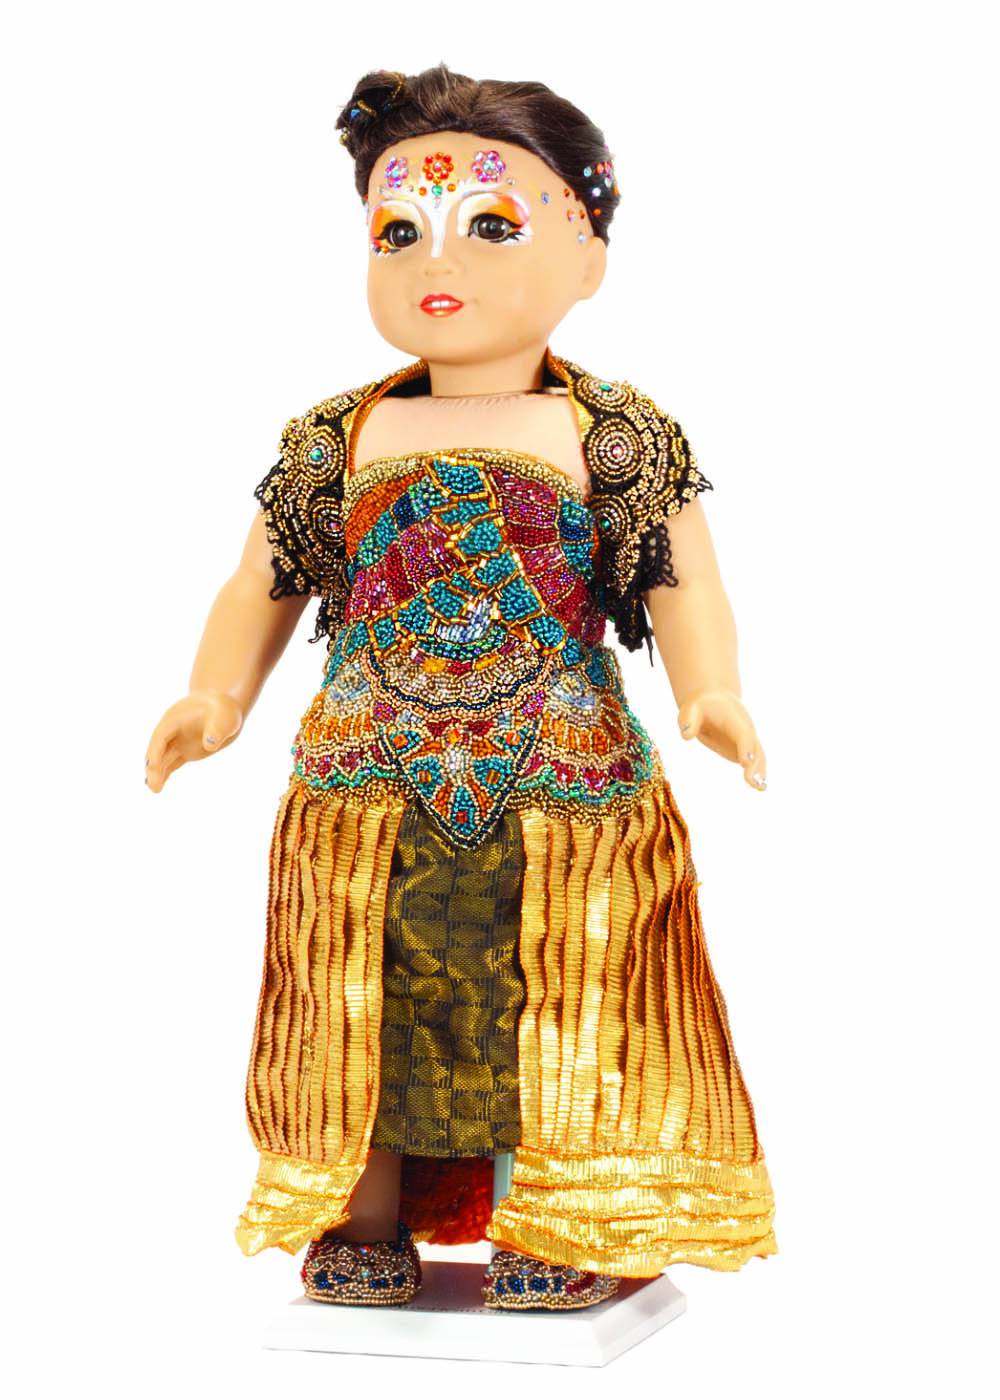 Verekai doll - Customized American girl doll